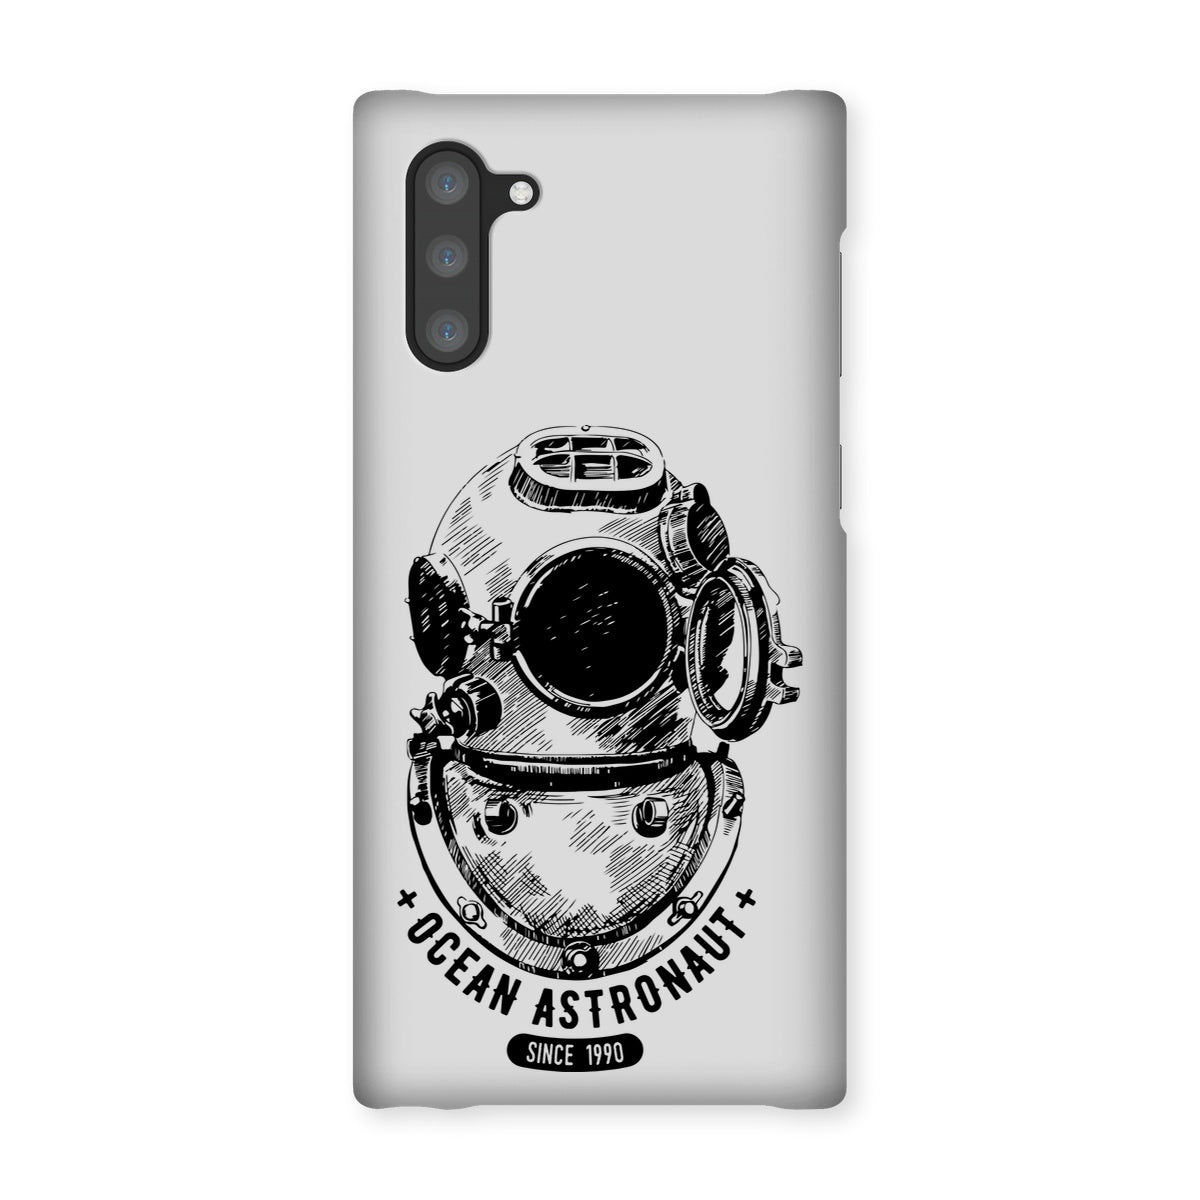 AQUA B&W - 05 - Ocean astronaut - Snap Phone Case